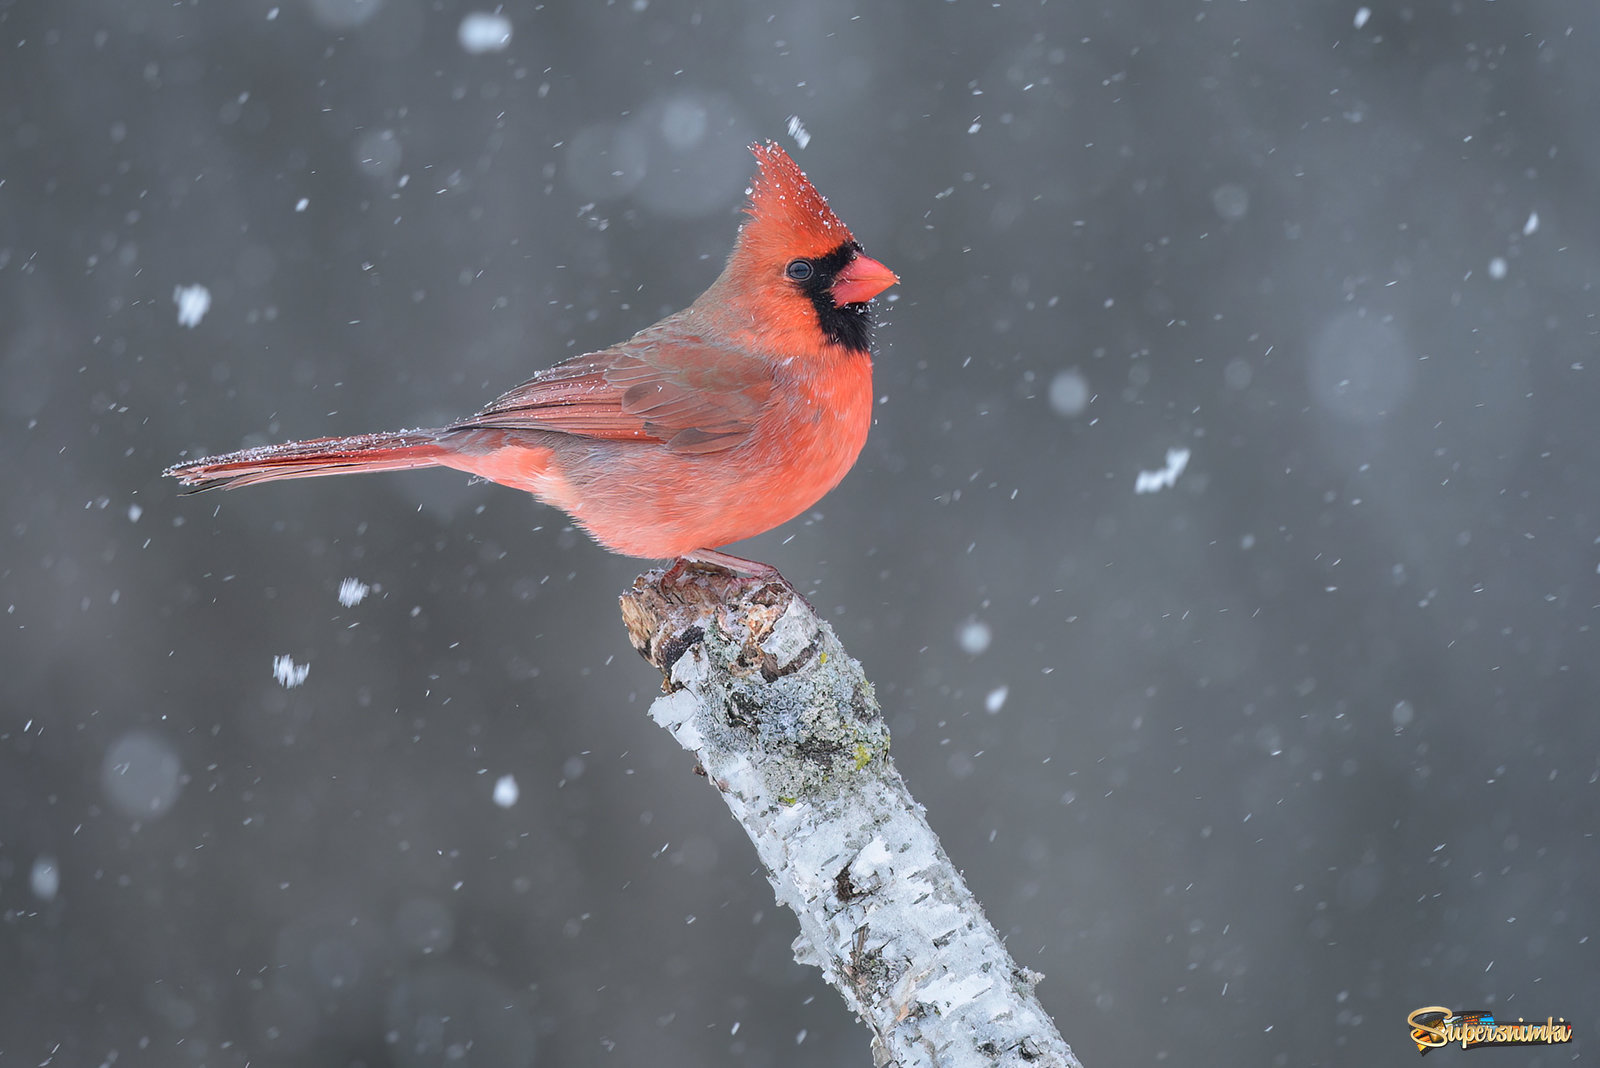  Northern cardinal (male)